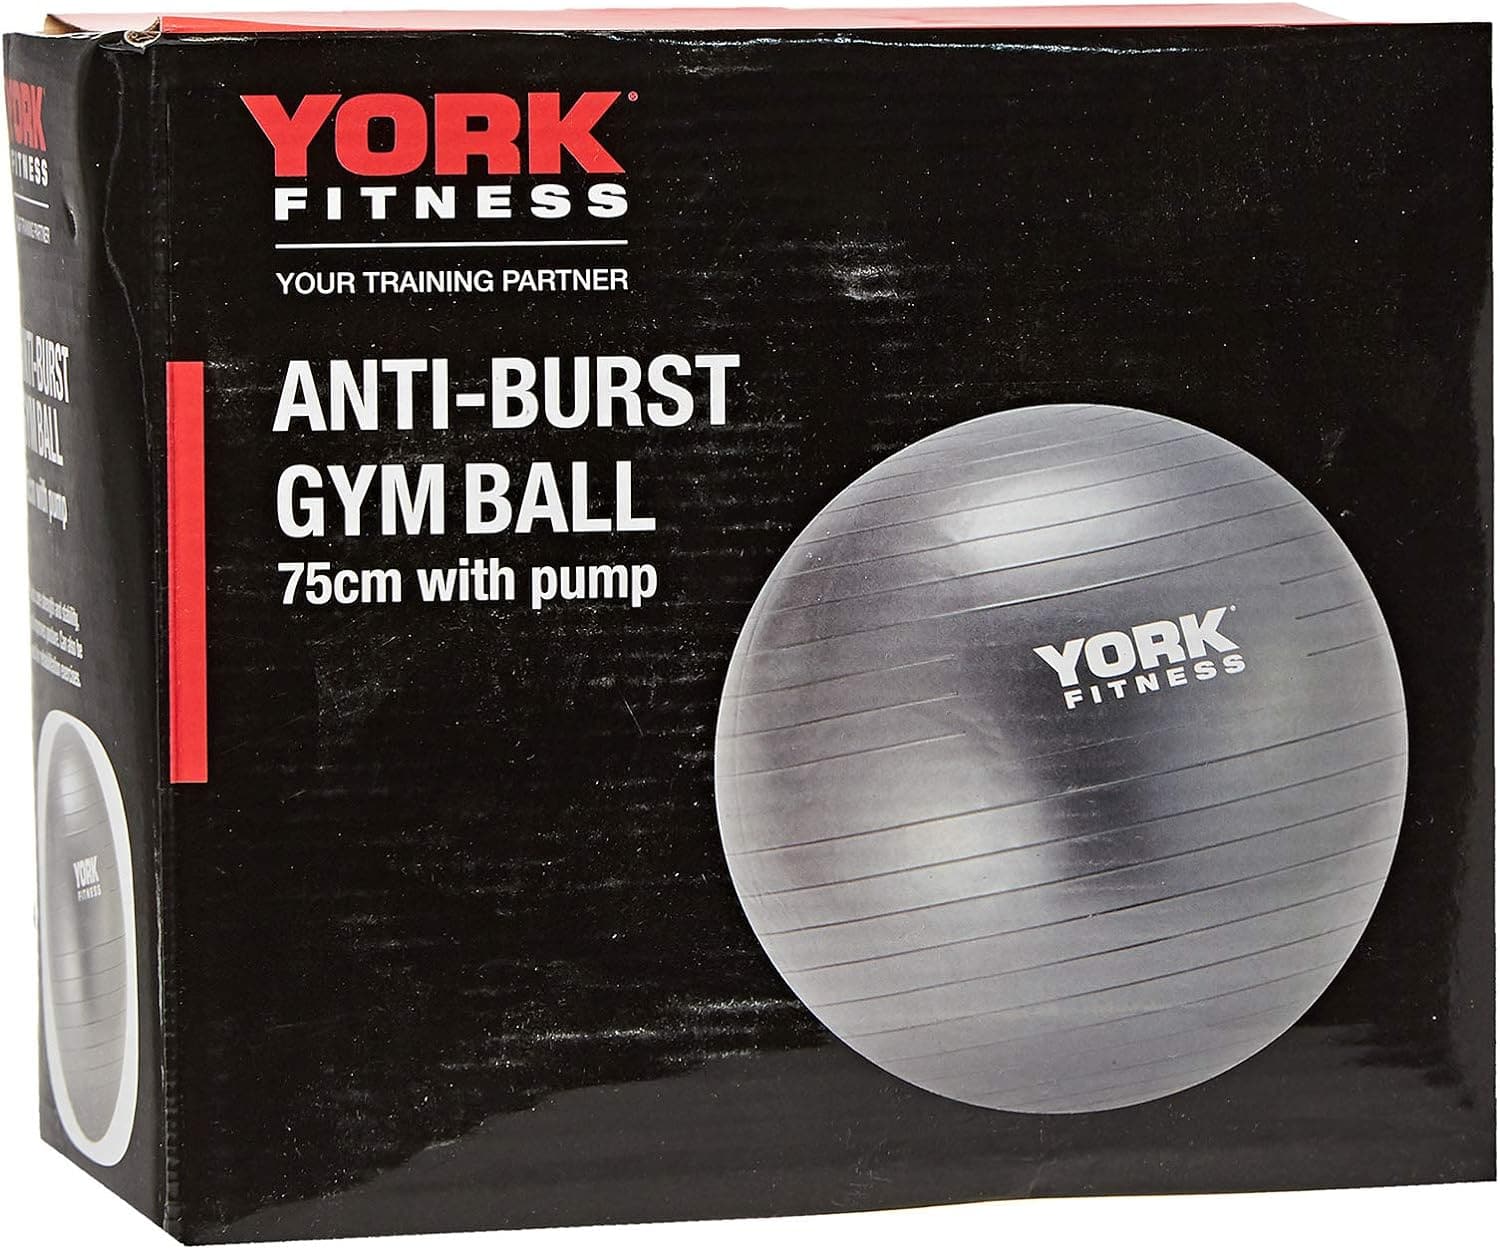 York Fitness Anti Burst Gym Ball - 75cm with Pump - Athletix.ae